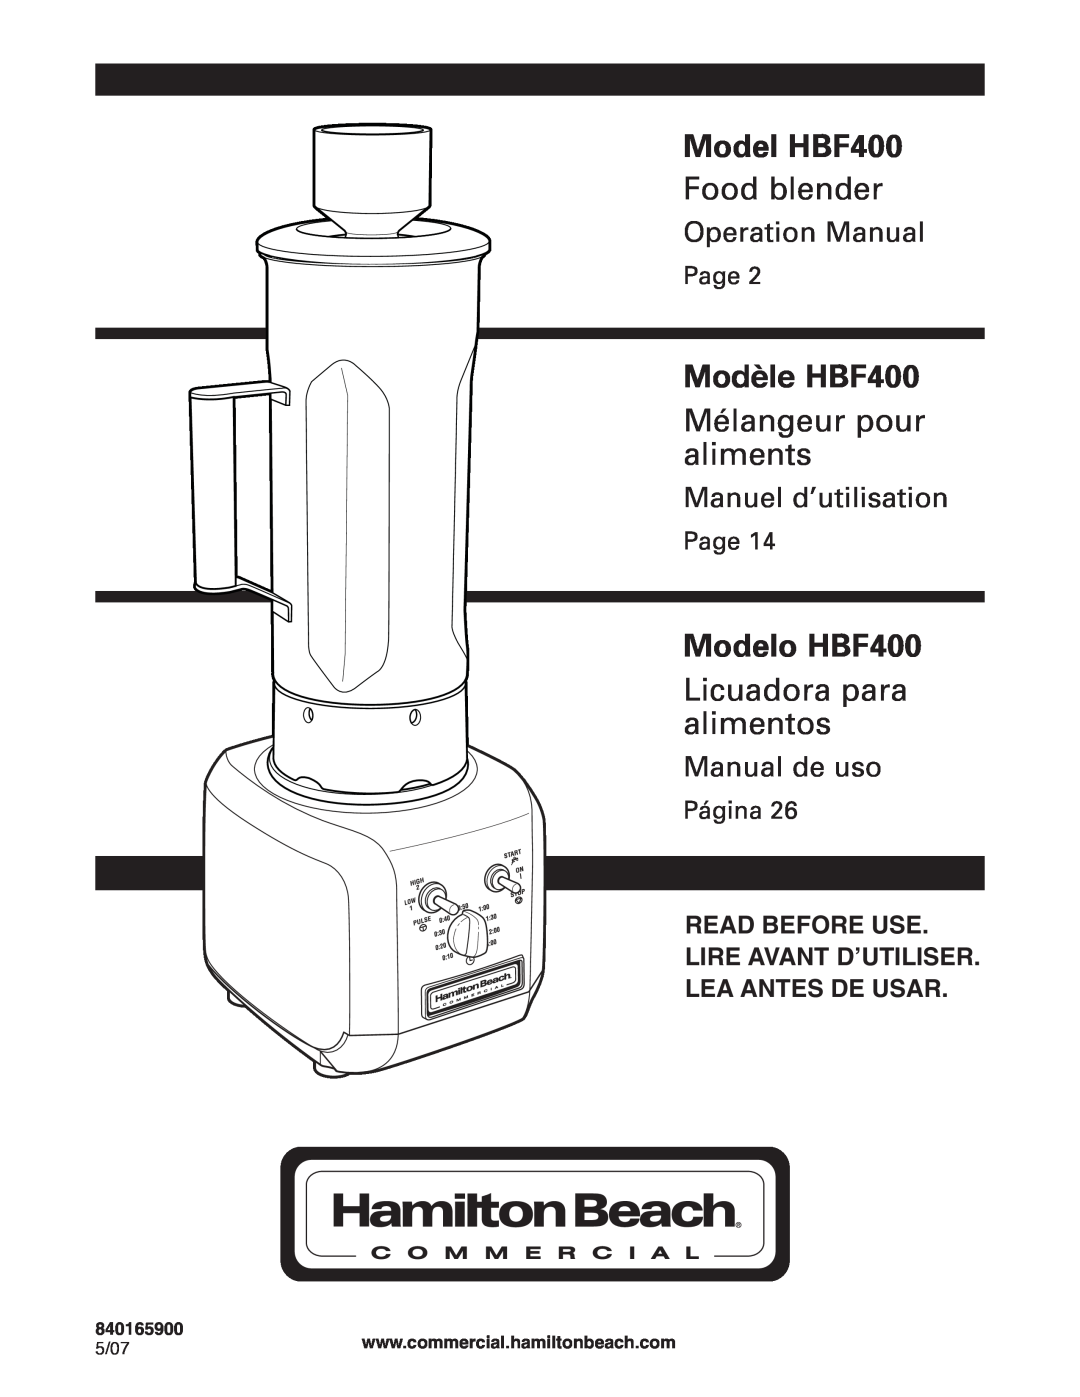 Hamilton Beach manuel dutilisation Model HBF400, Modèle HBF400, Modelo HBF400, Read Before Use Lire Avant D’Utiliser 